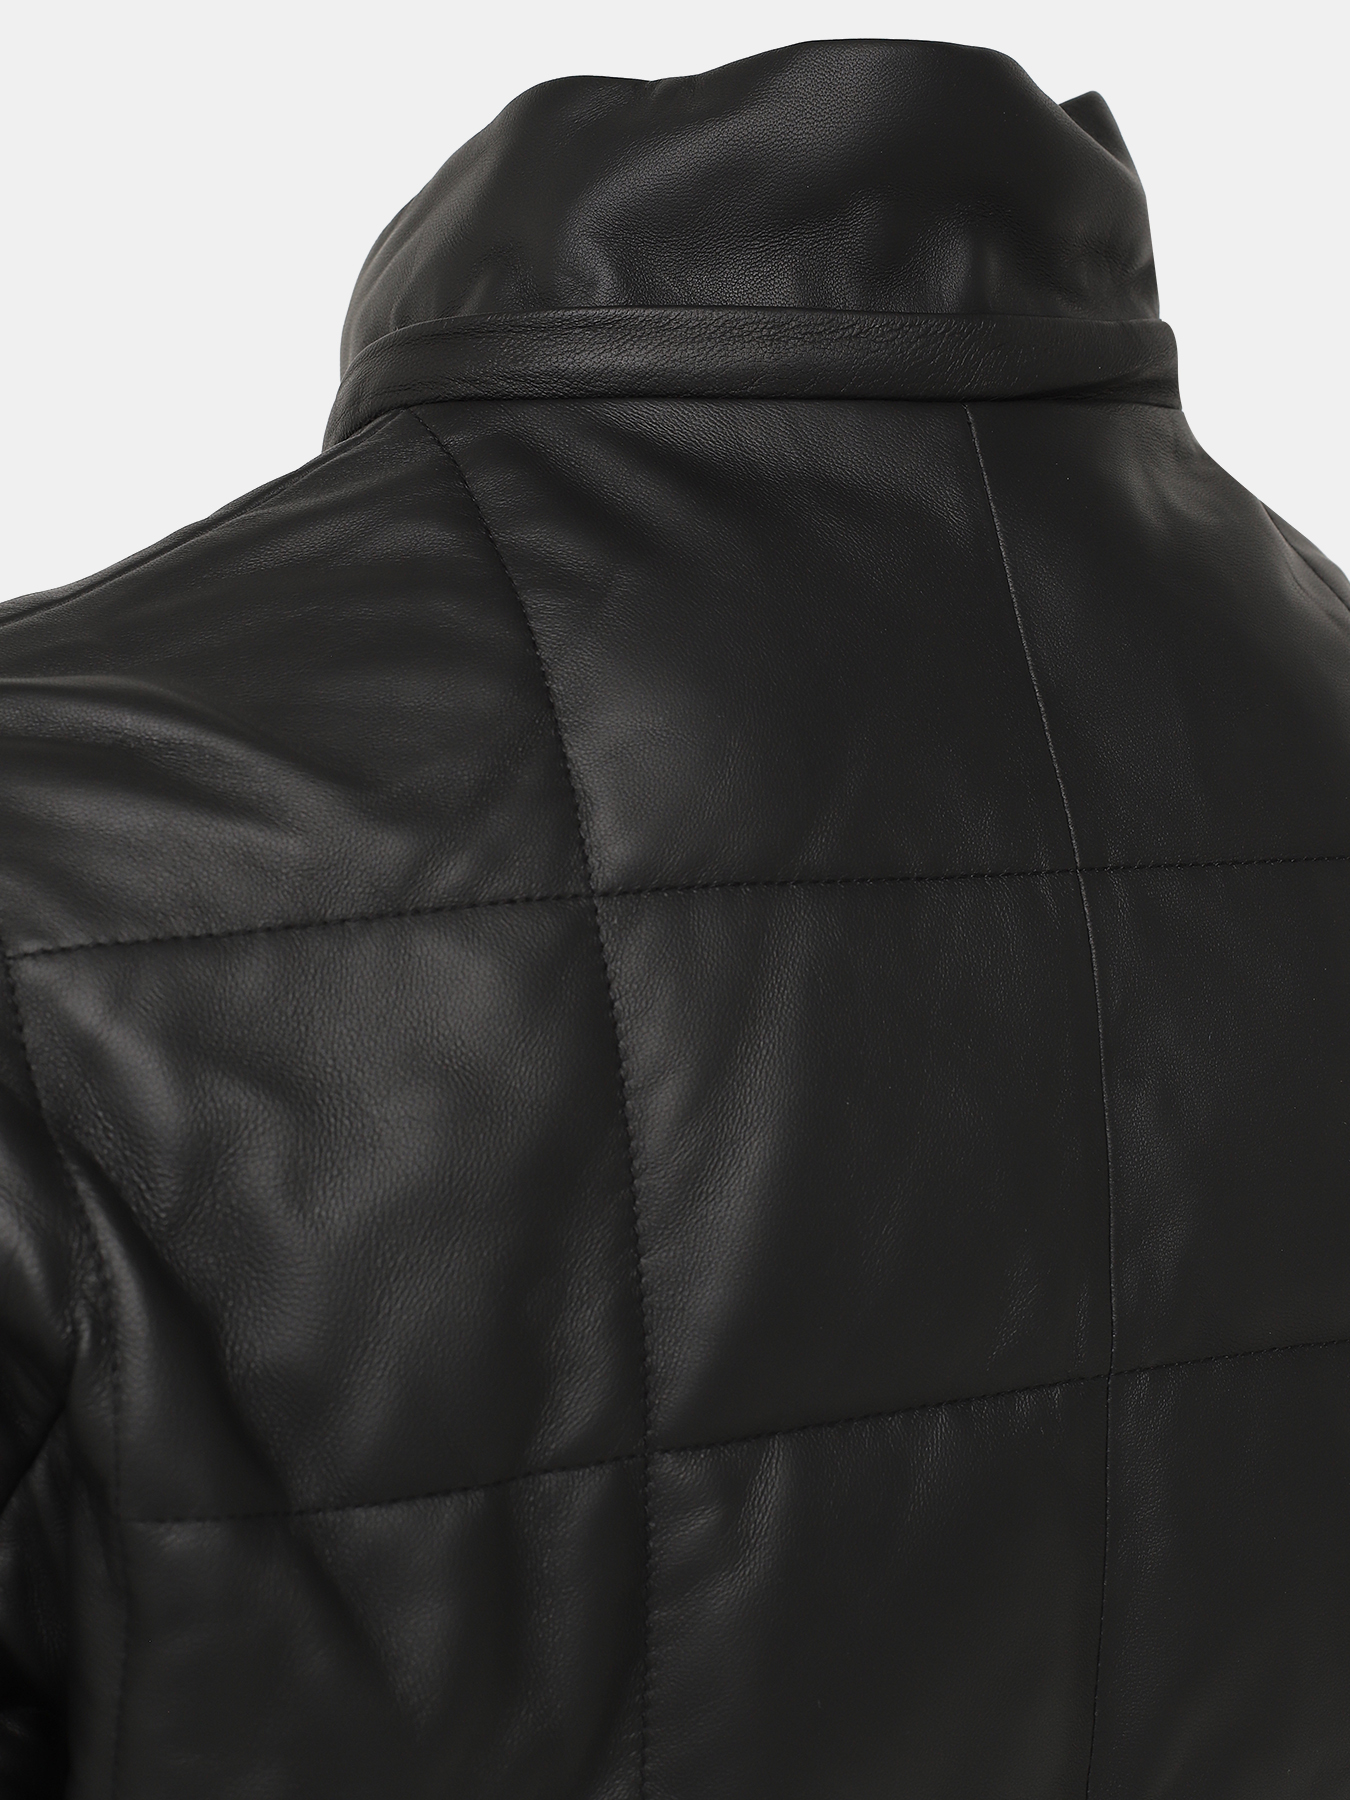 Кожаная куртка Ritter 390994-025, цвет черный, размер 48 - фото 3